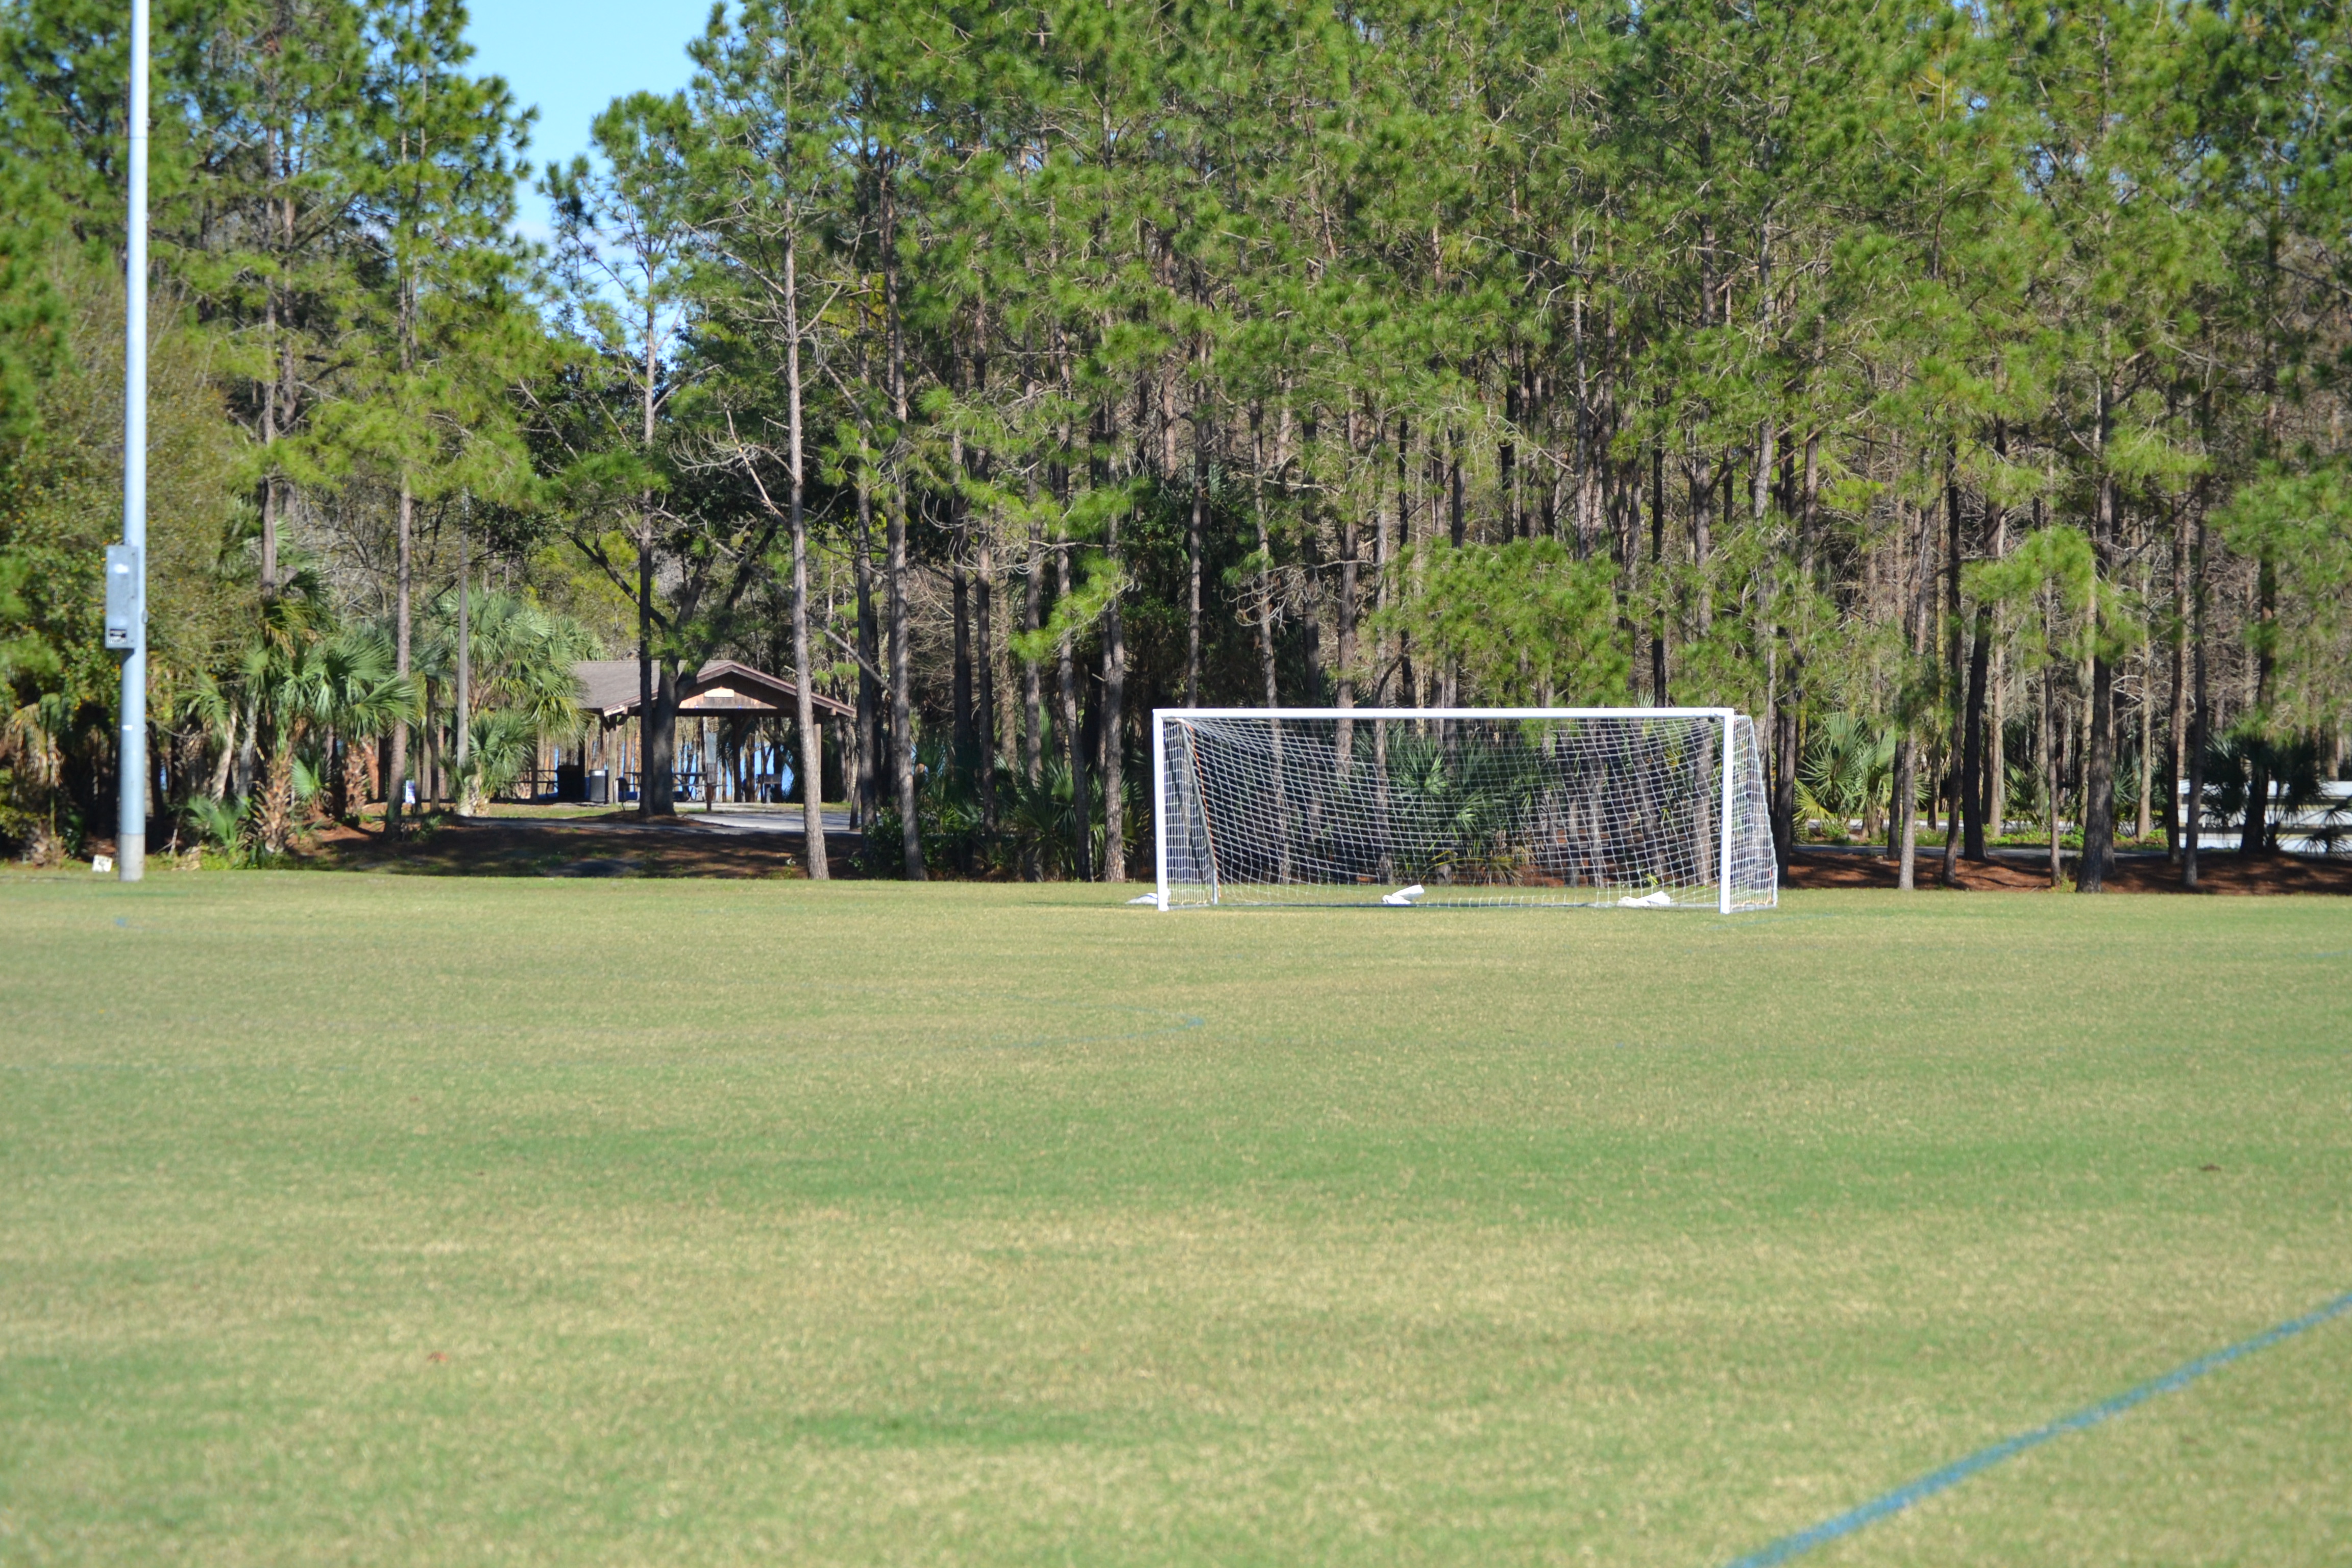 A soccer field at Lake Parker Park